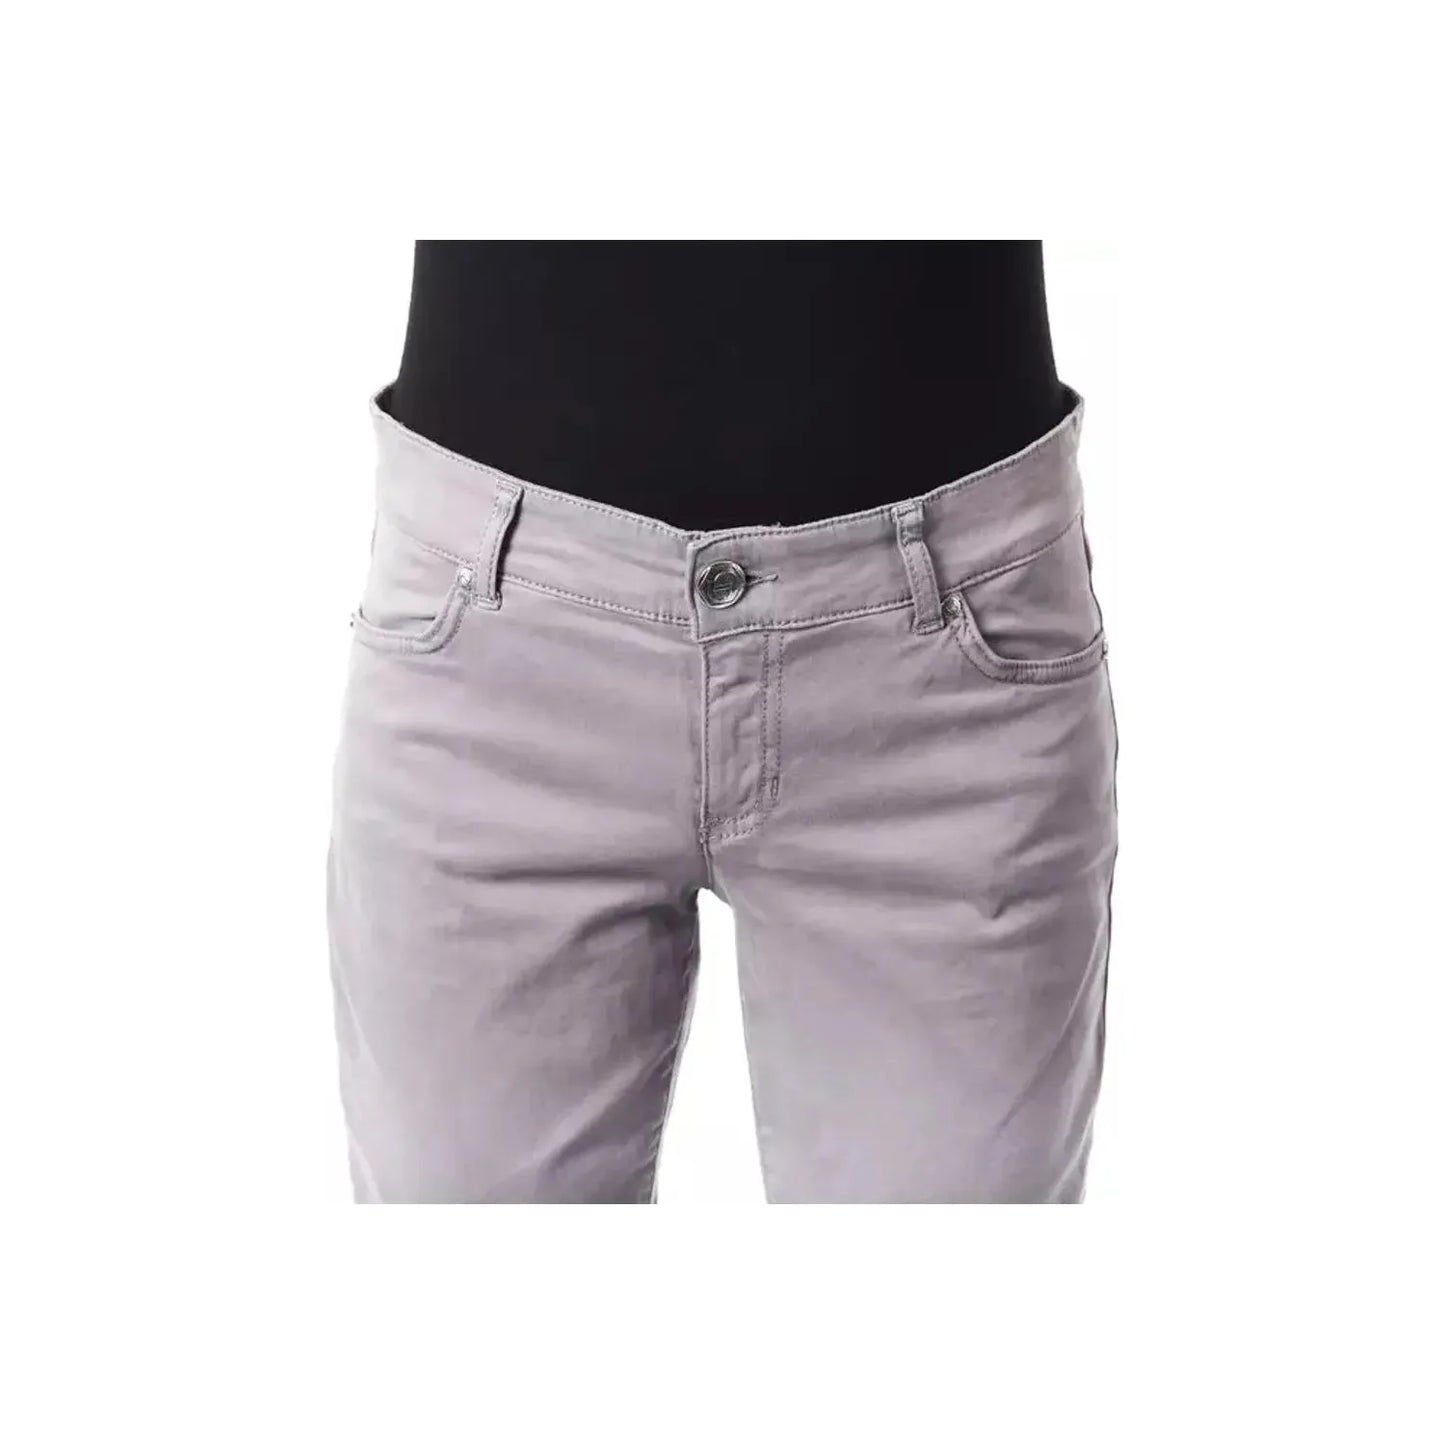 BYBLOS Chic Gray Cotton Blend Pants gray-cotton-jeans-pant-14 stock_product_image_17633_866093021-16-f1b2a5b0-b4a.webp